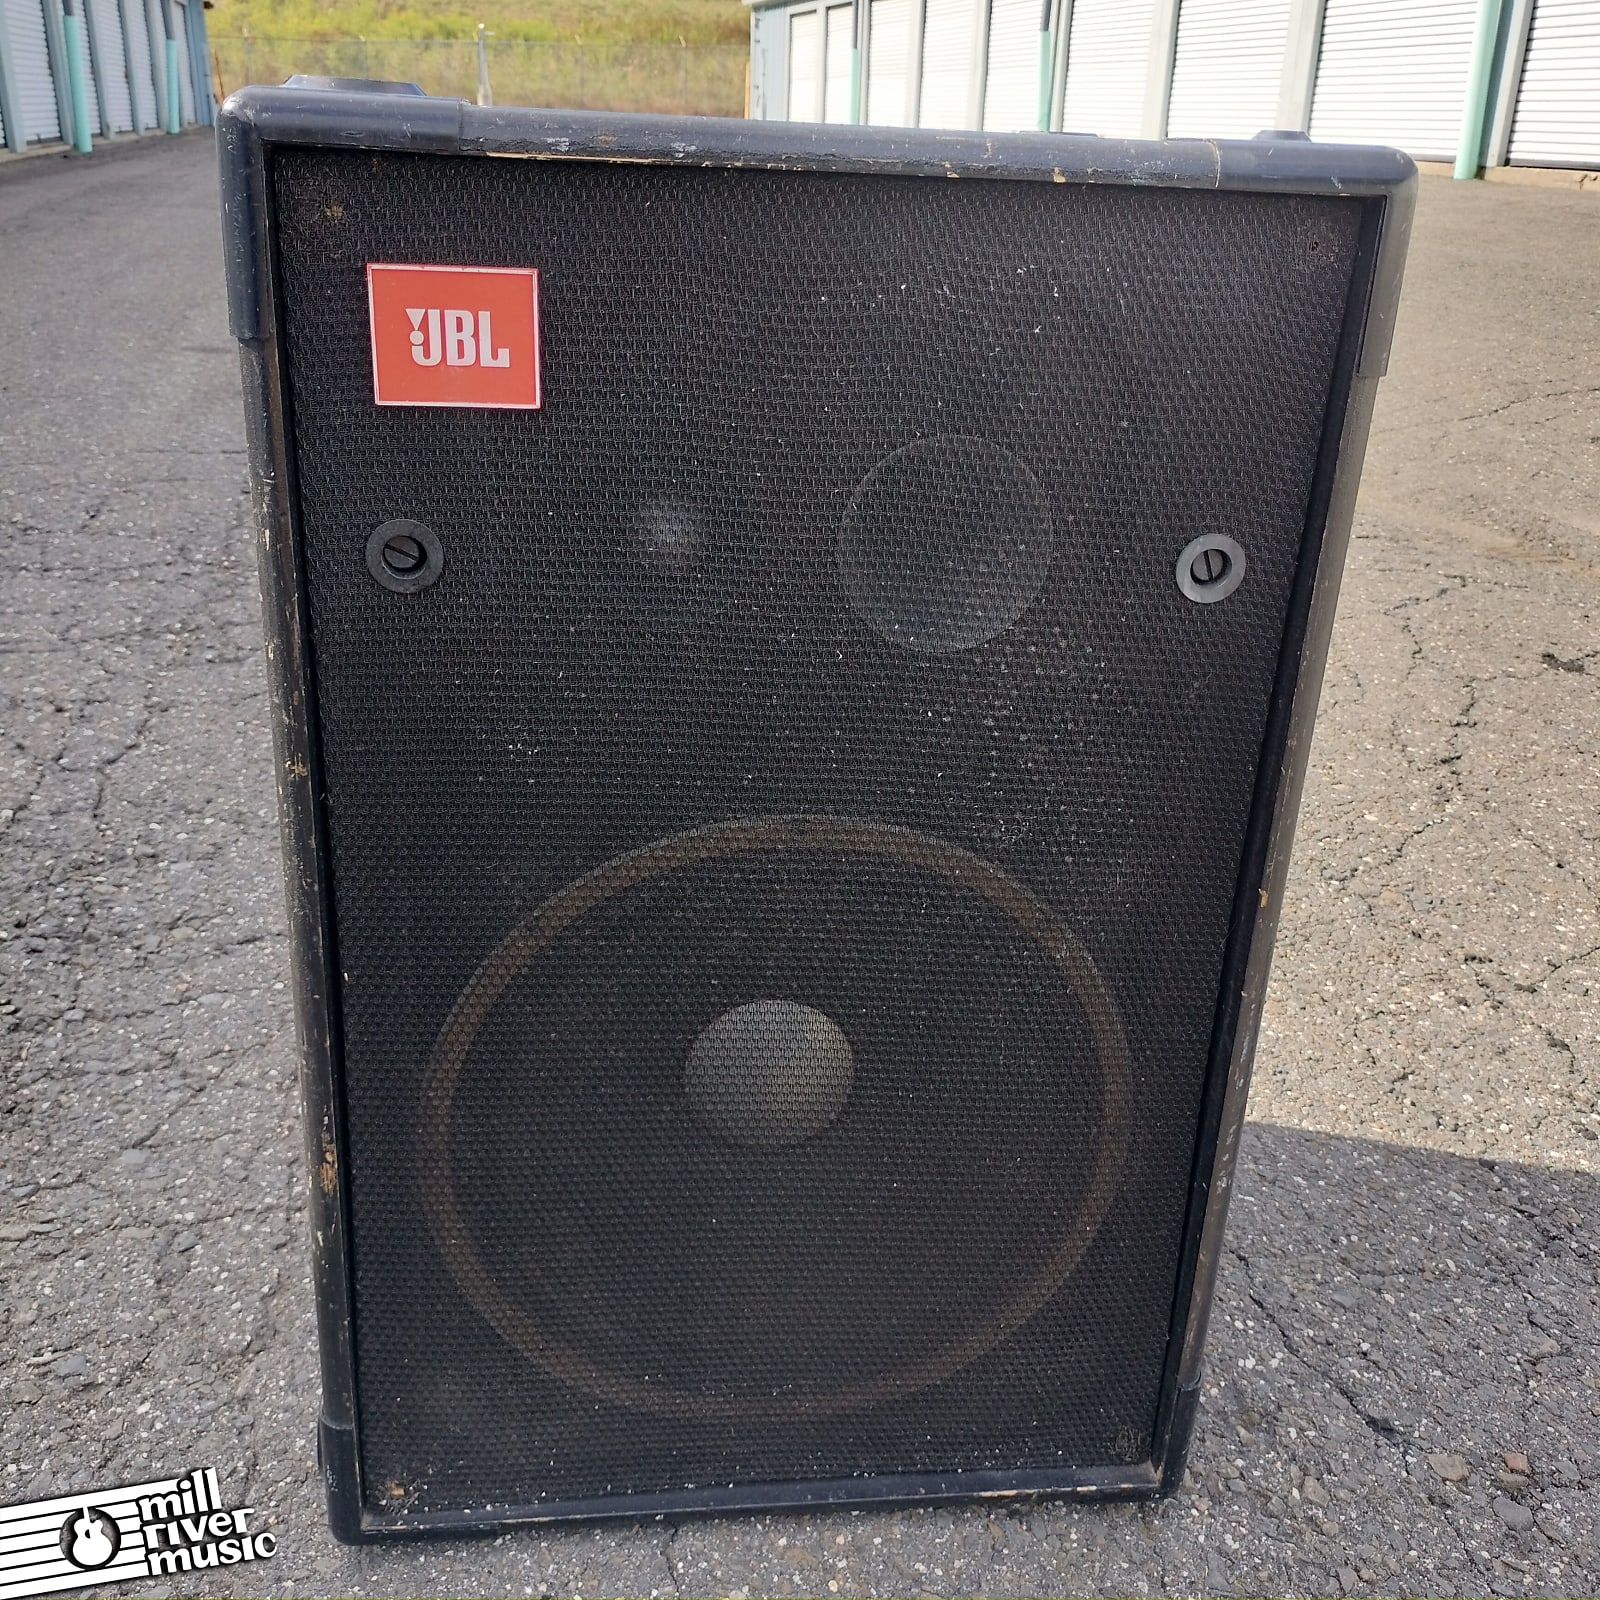 JBL Professional Series Model 4690 PA Speaker Used